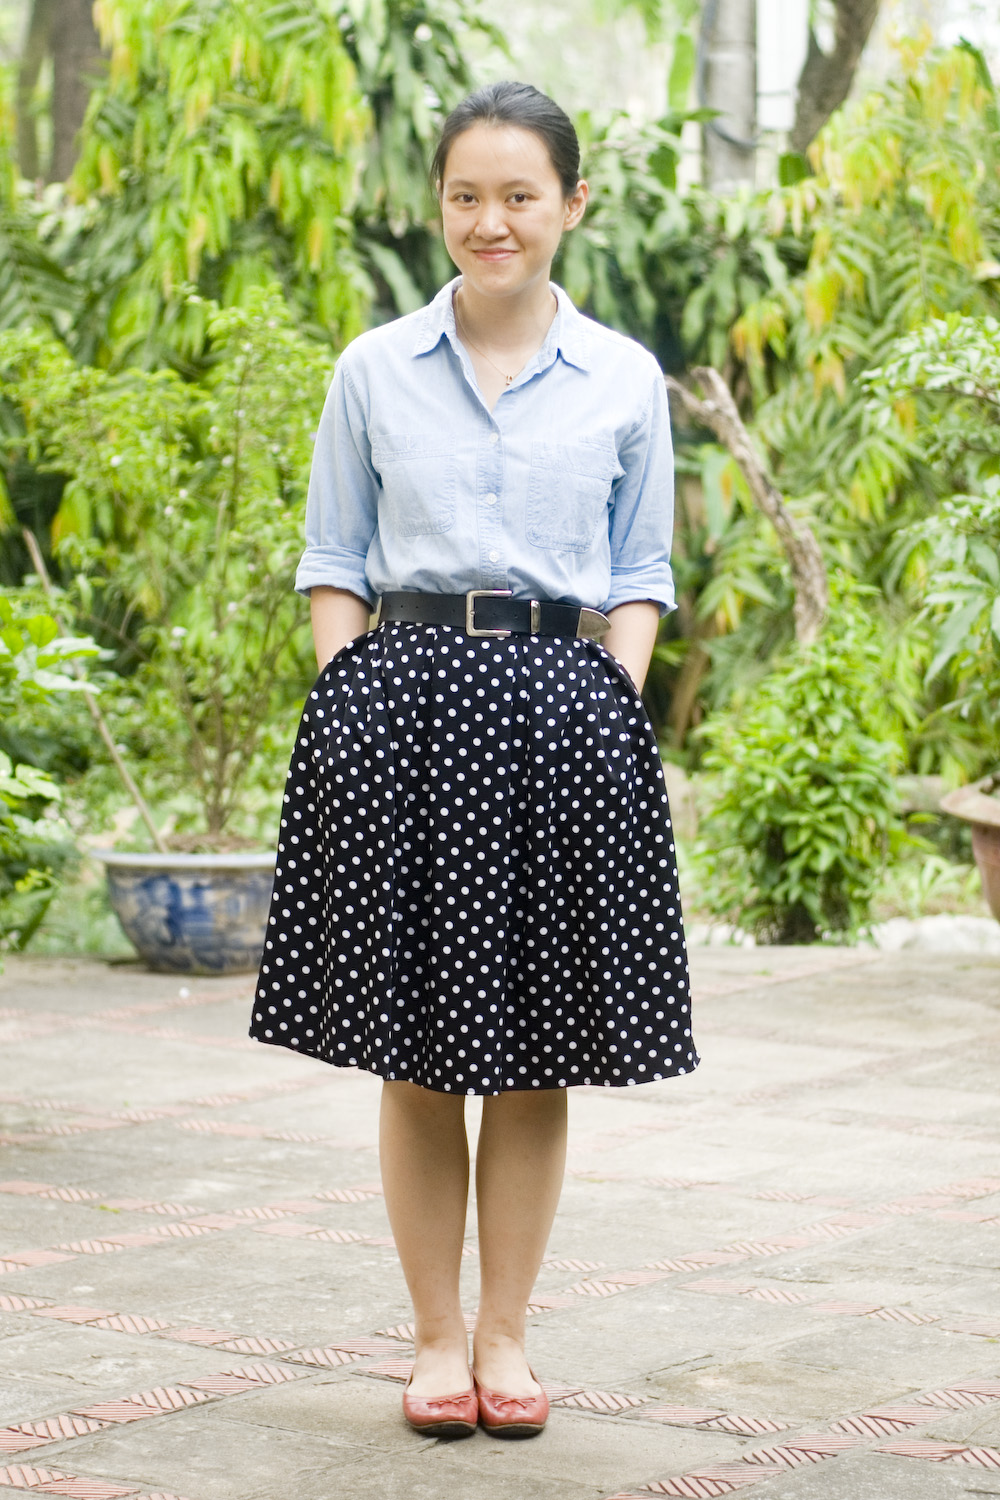 blue polka dot skirt outfit